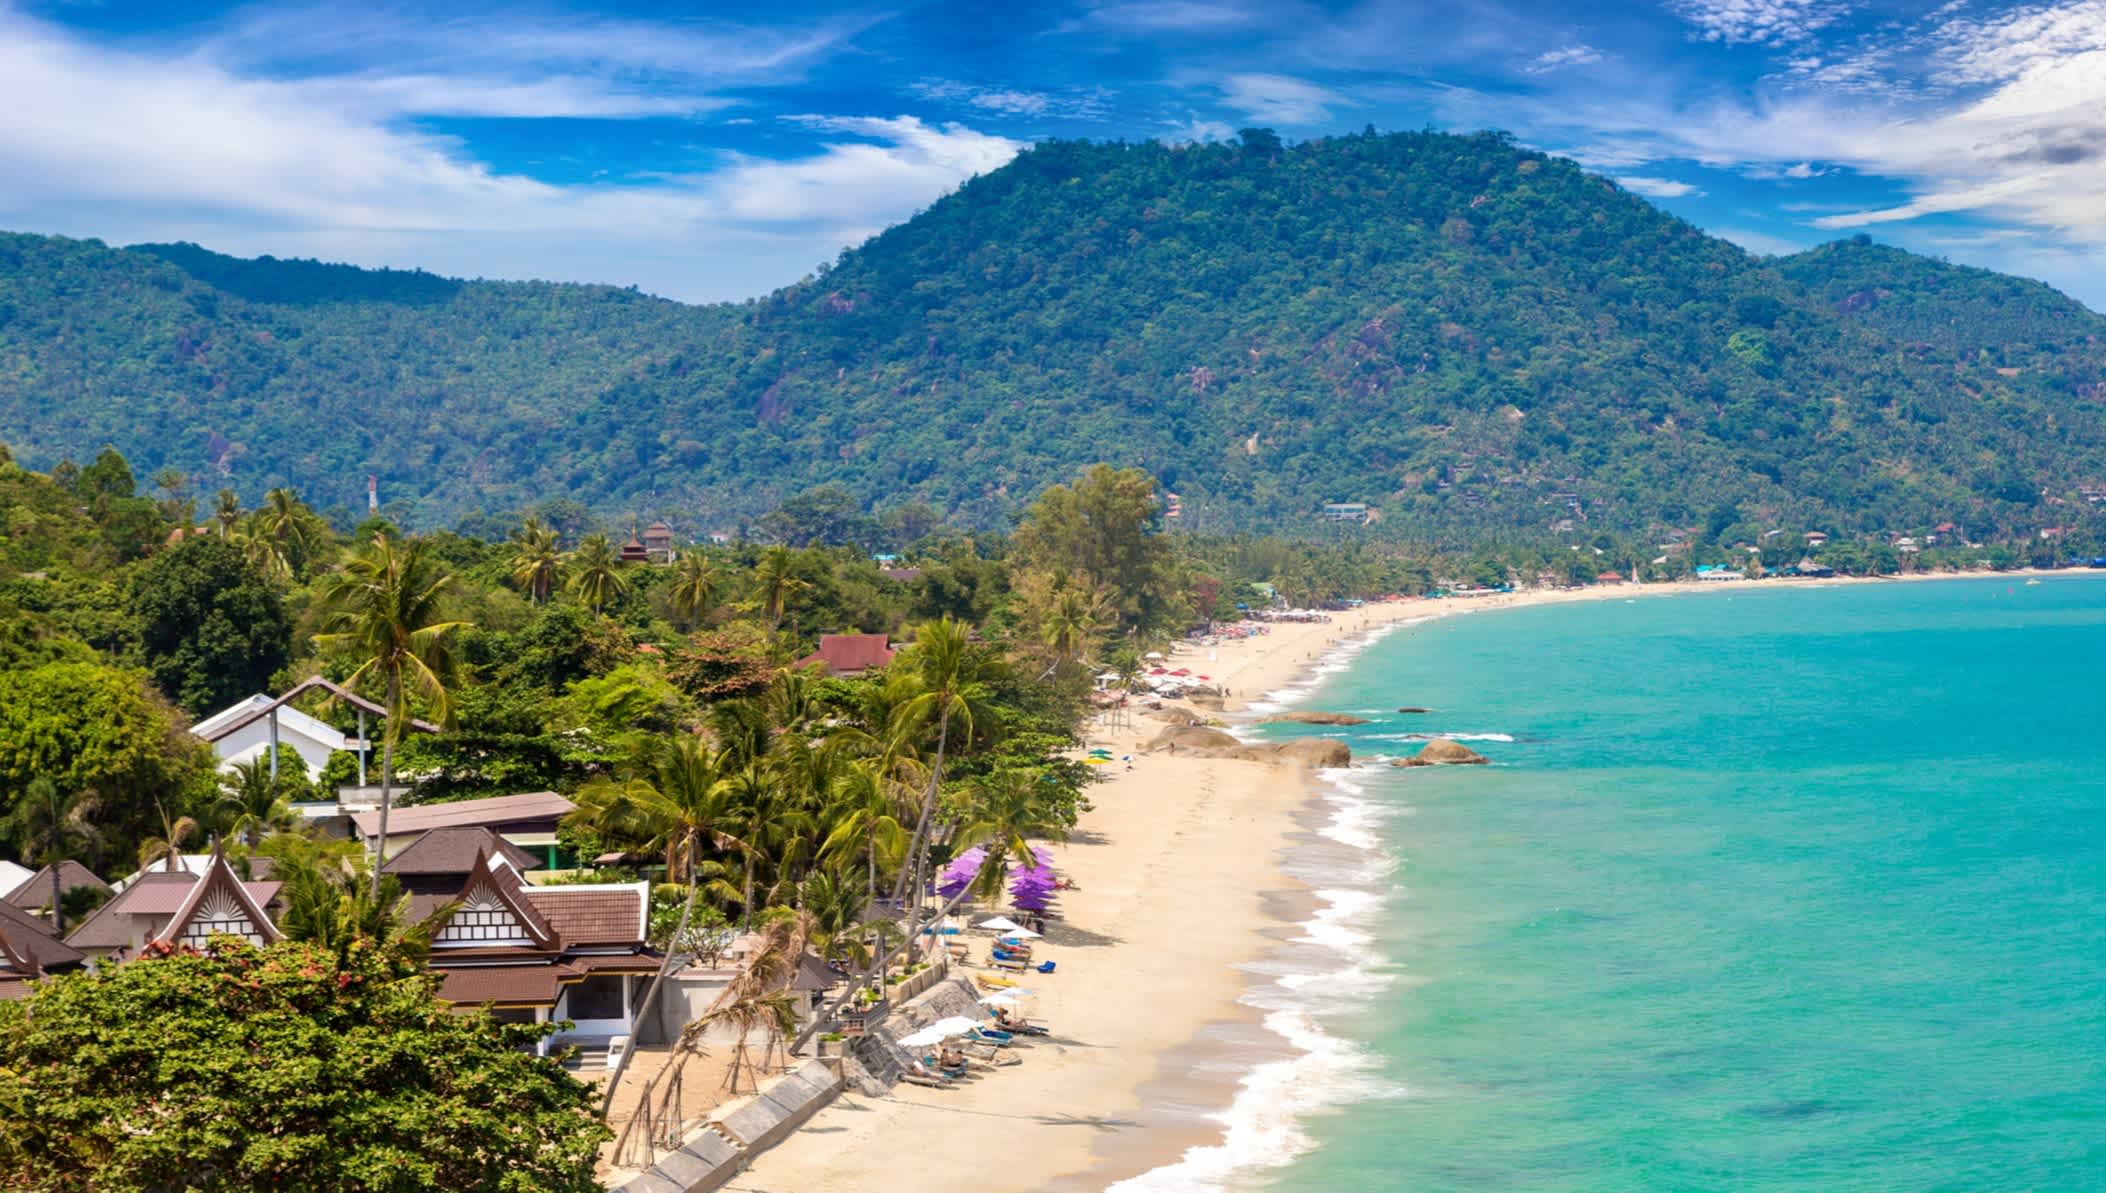 Luftaufnahme des Lamai Beach auf Koh Samui, Thailand
